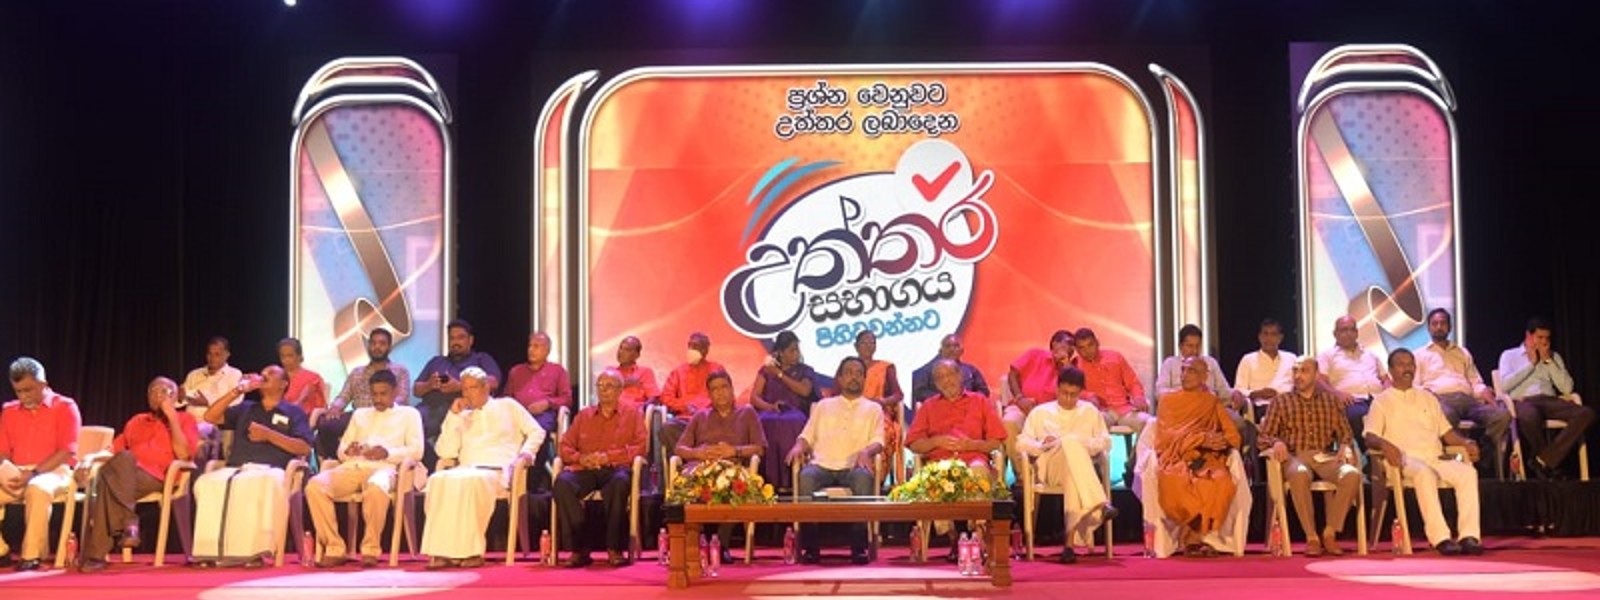 Initial meeting of 'Uththara Lanka' coalition